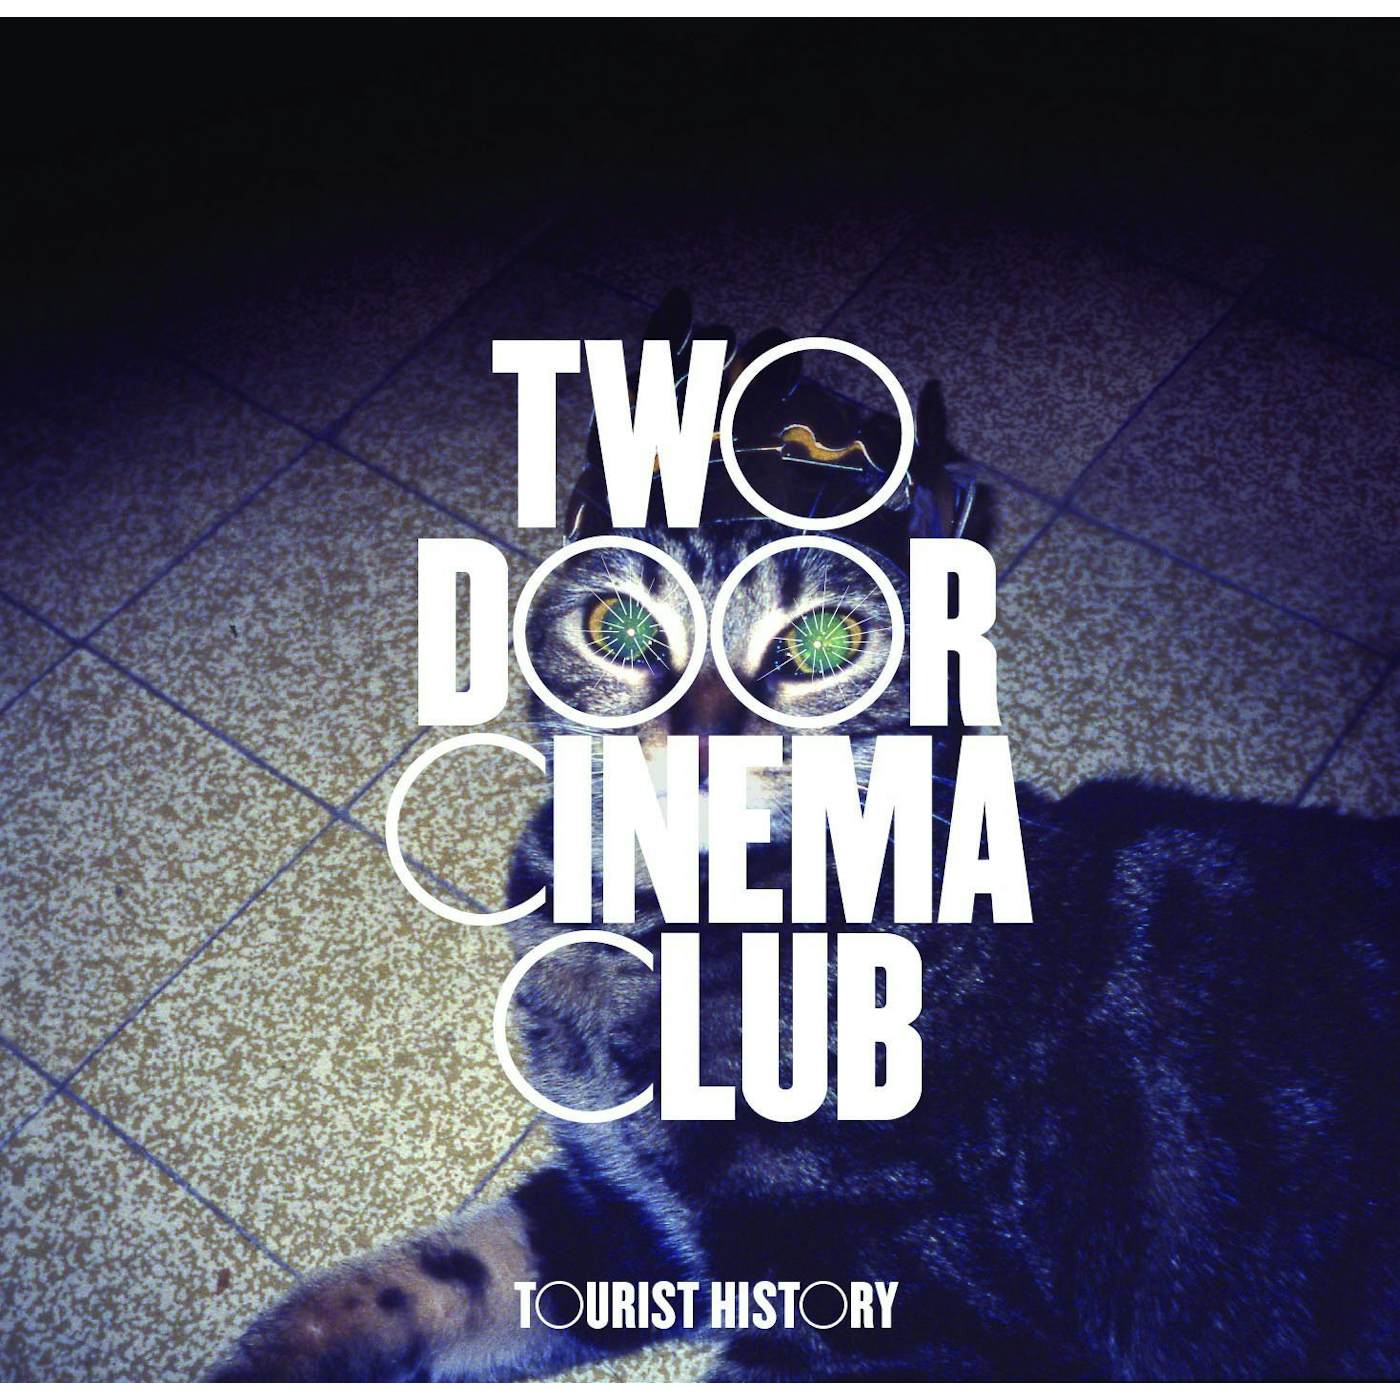 Two Door Cinema Club TOURIST HISTORY CD